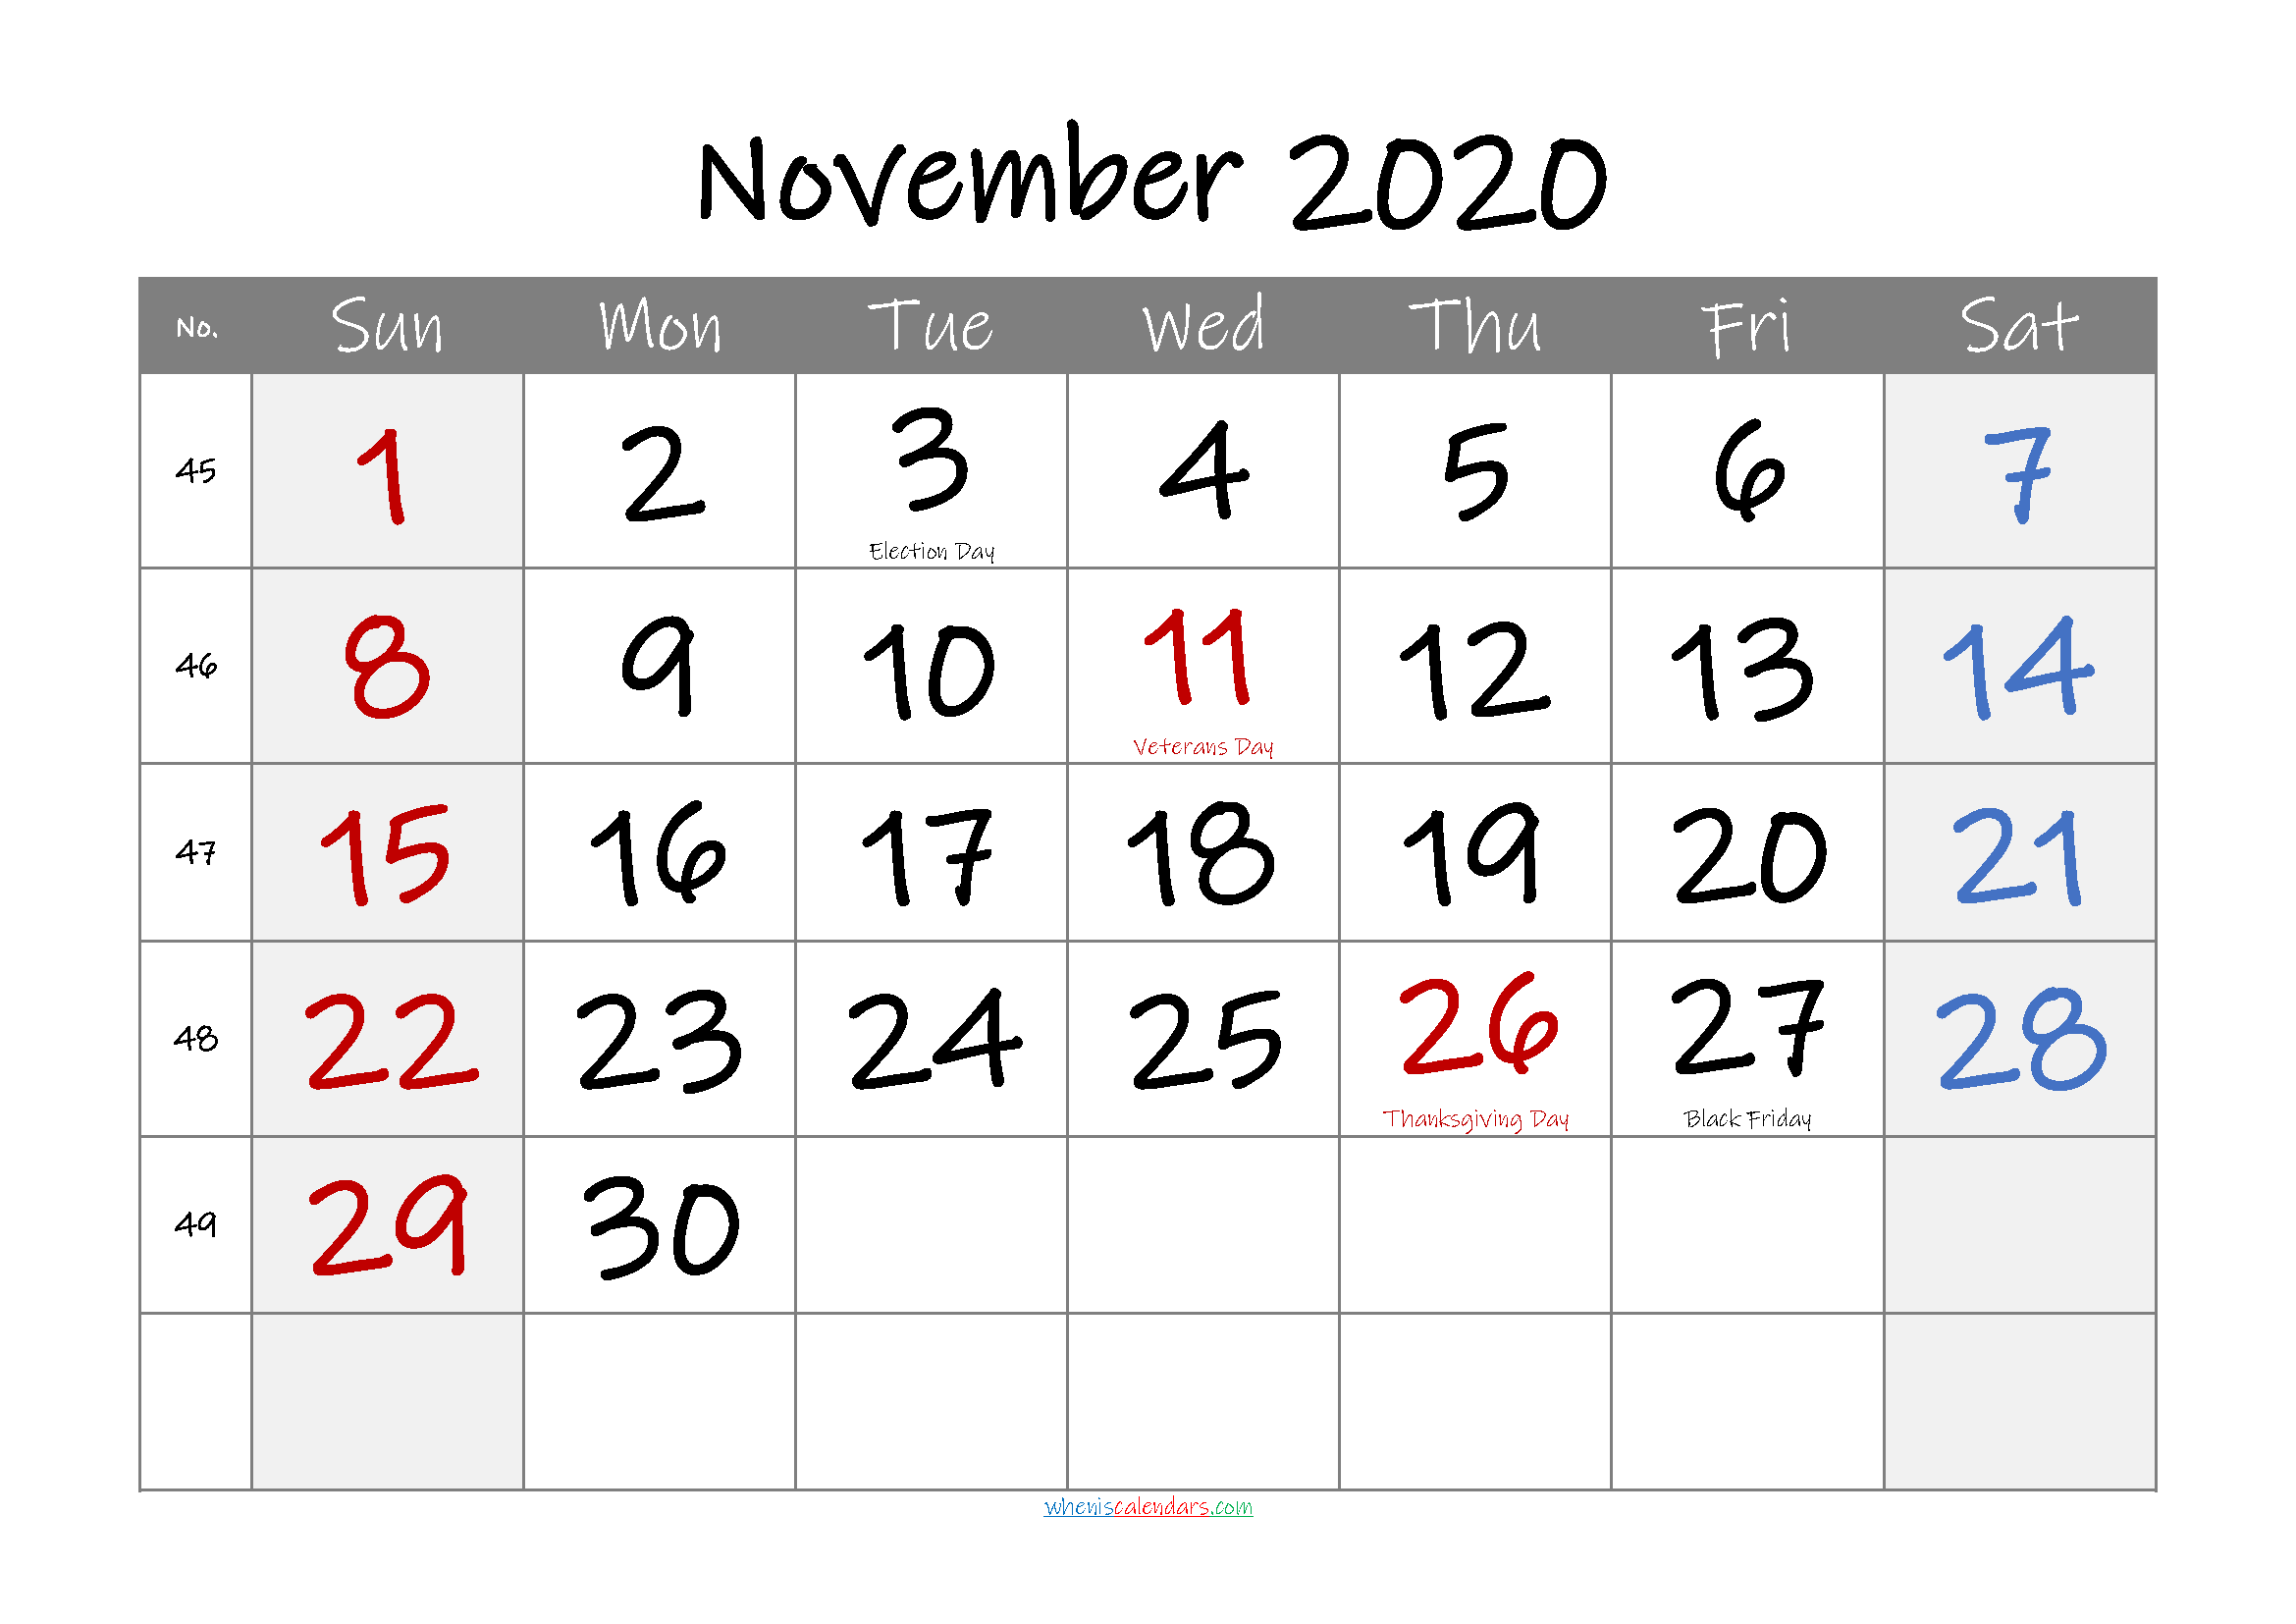 November 2020 Free Printable Calendar with Holidays